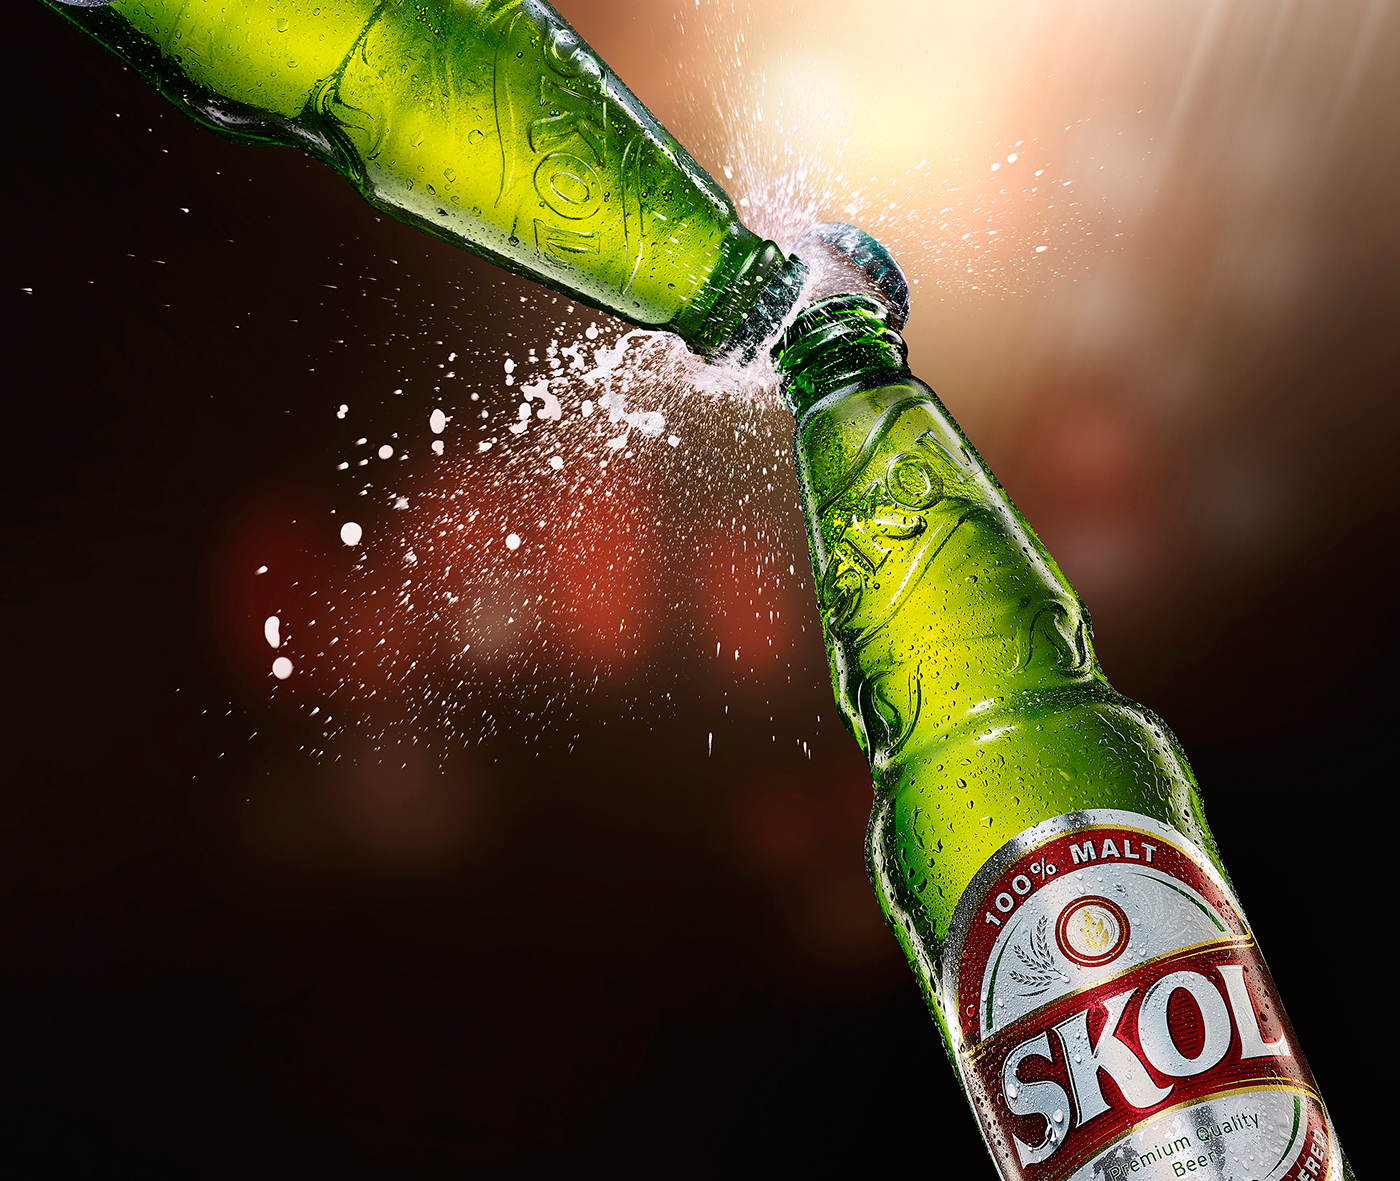 splash explosion explosive retouch digital bottles advertise green beer reflection Post Production Label studio drink